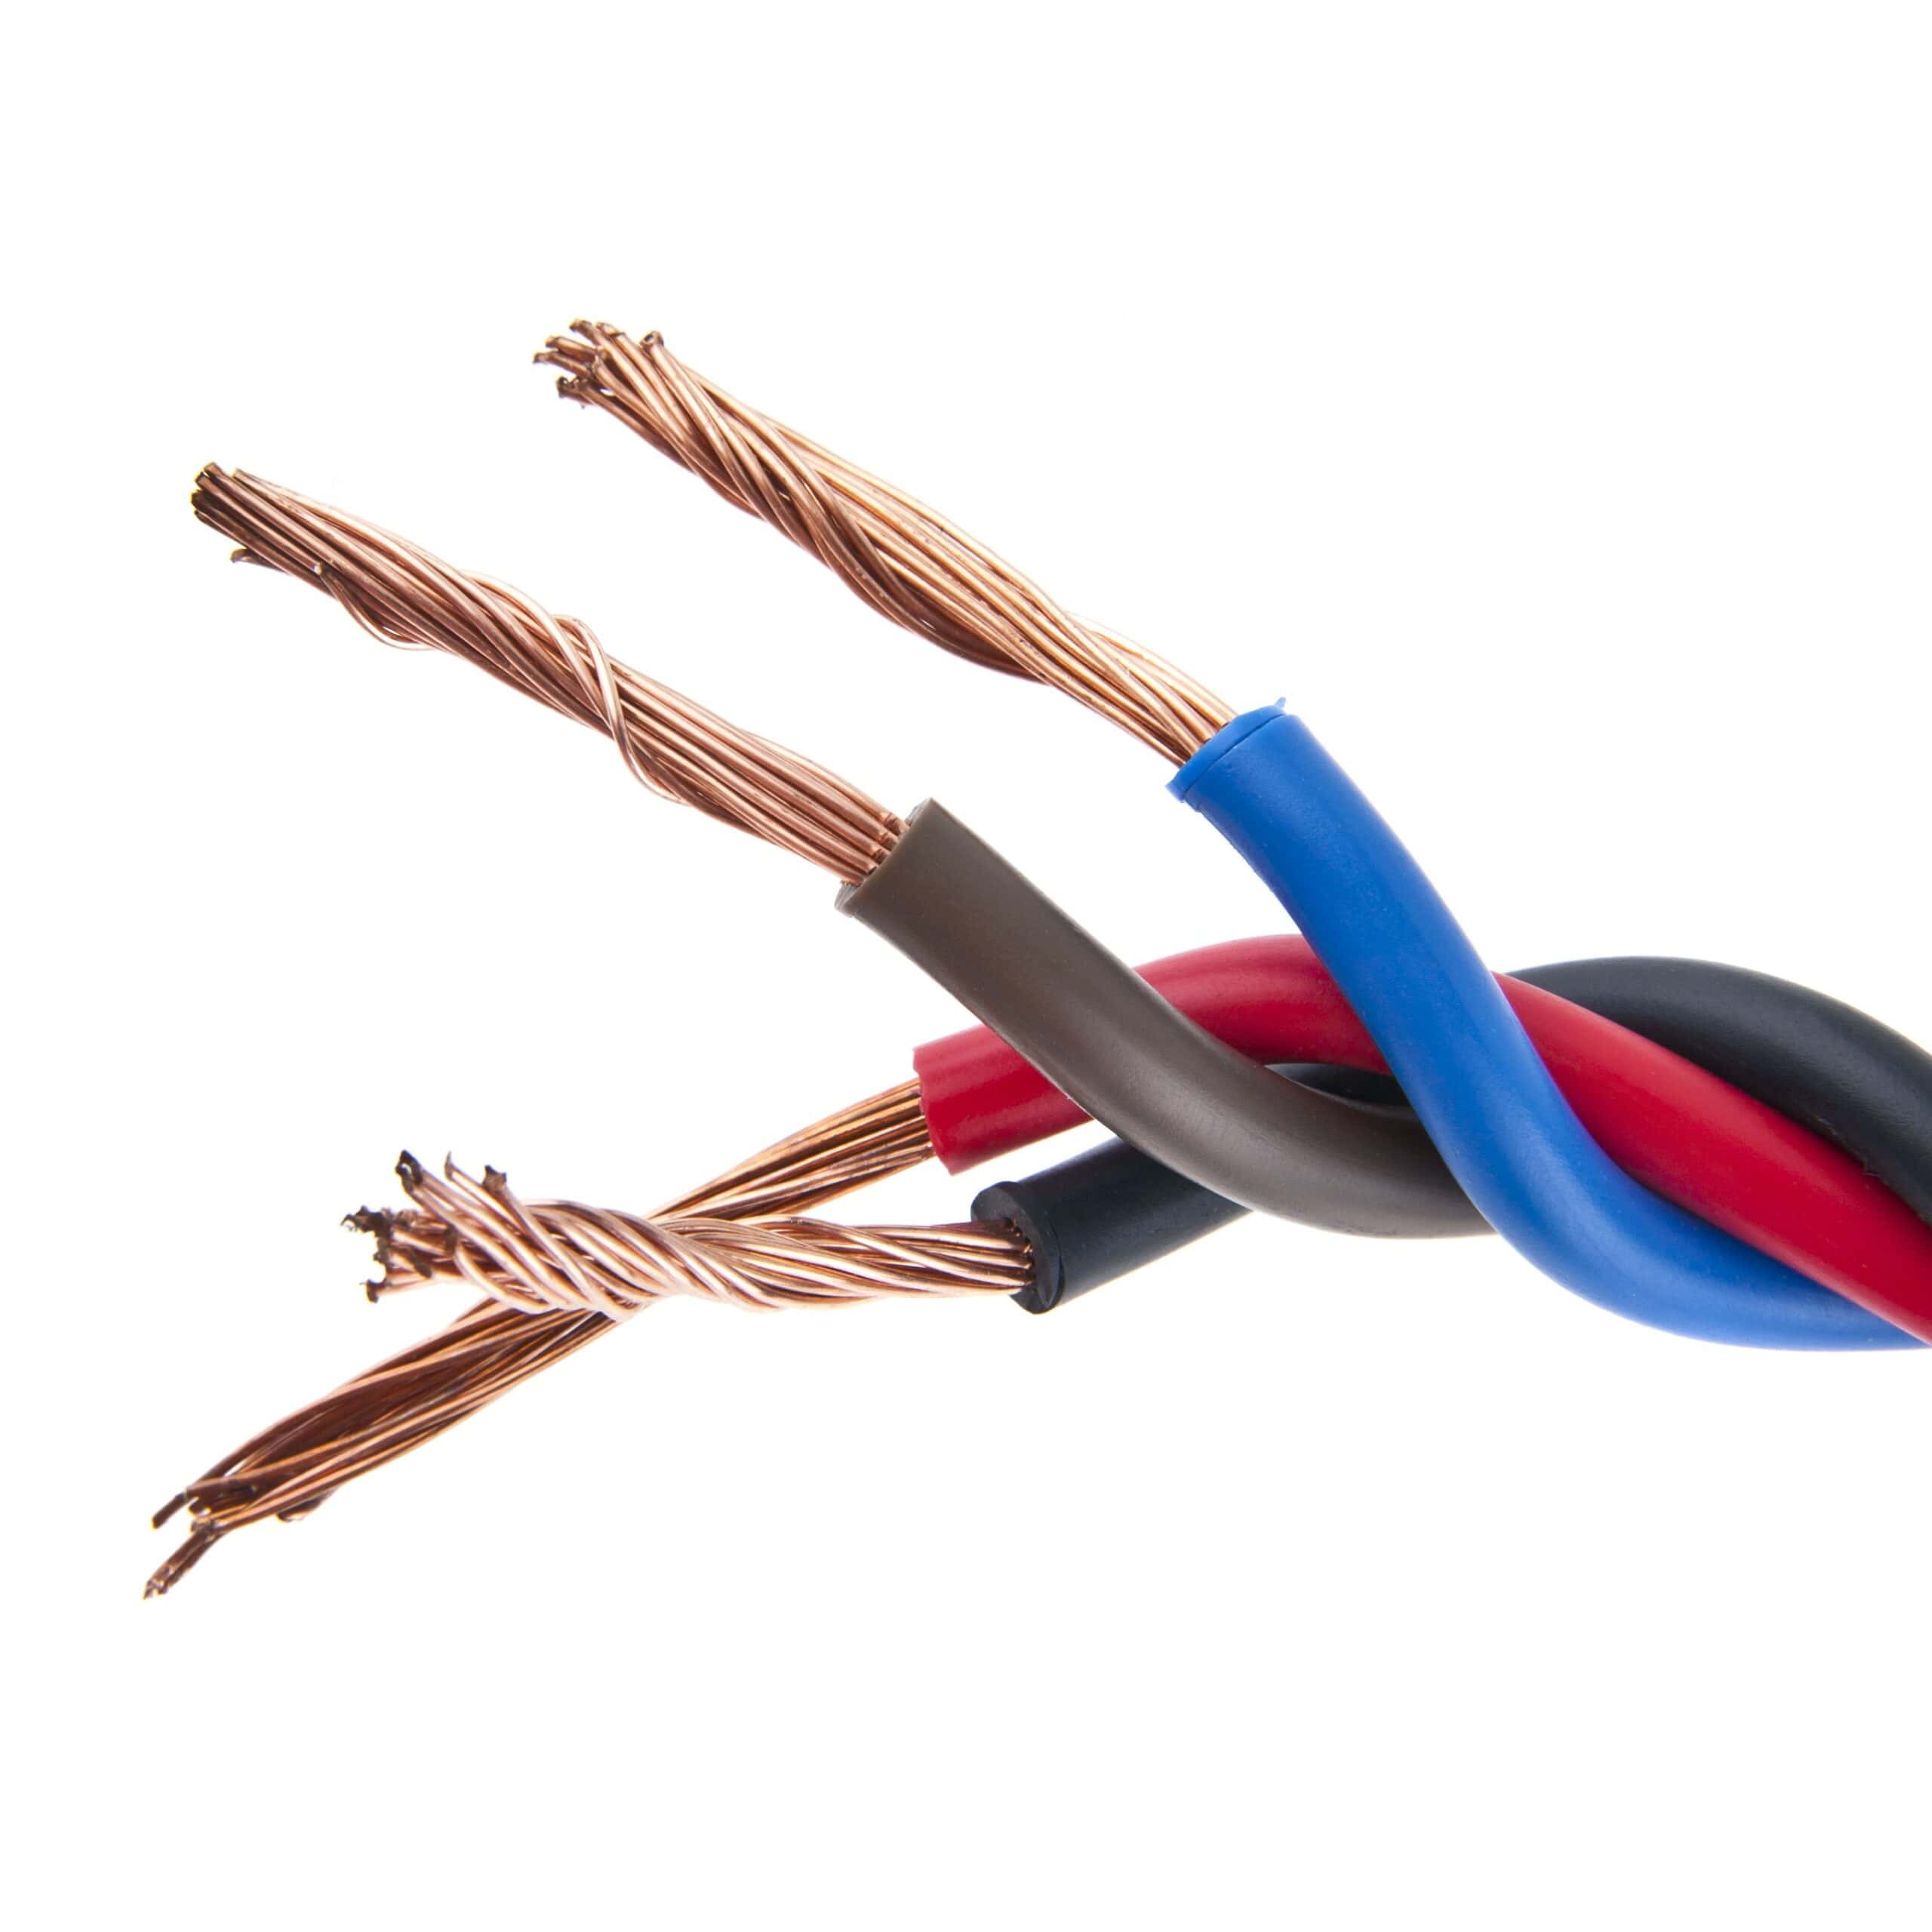 electrical wiring repair